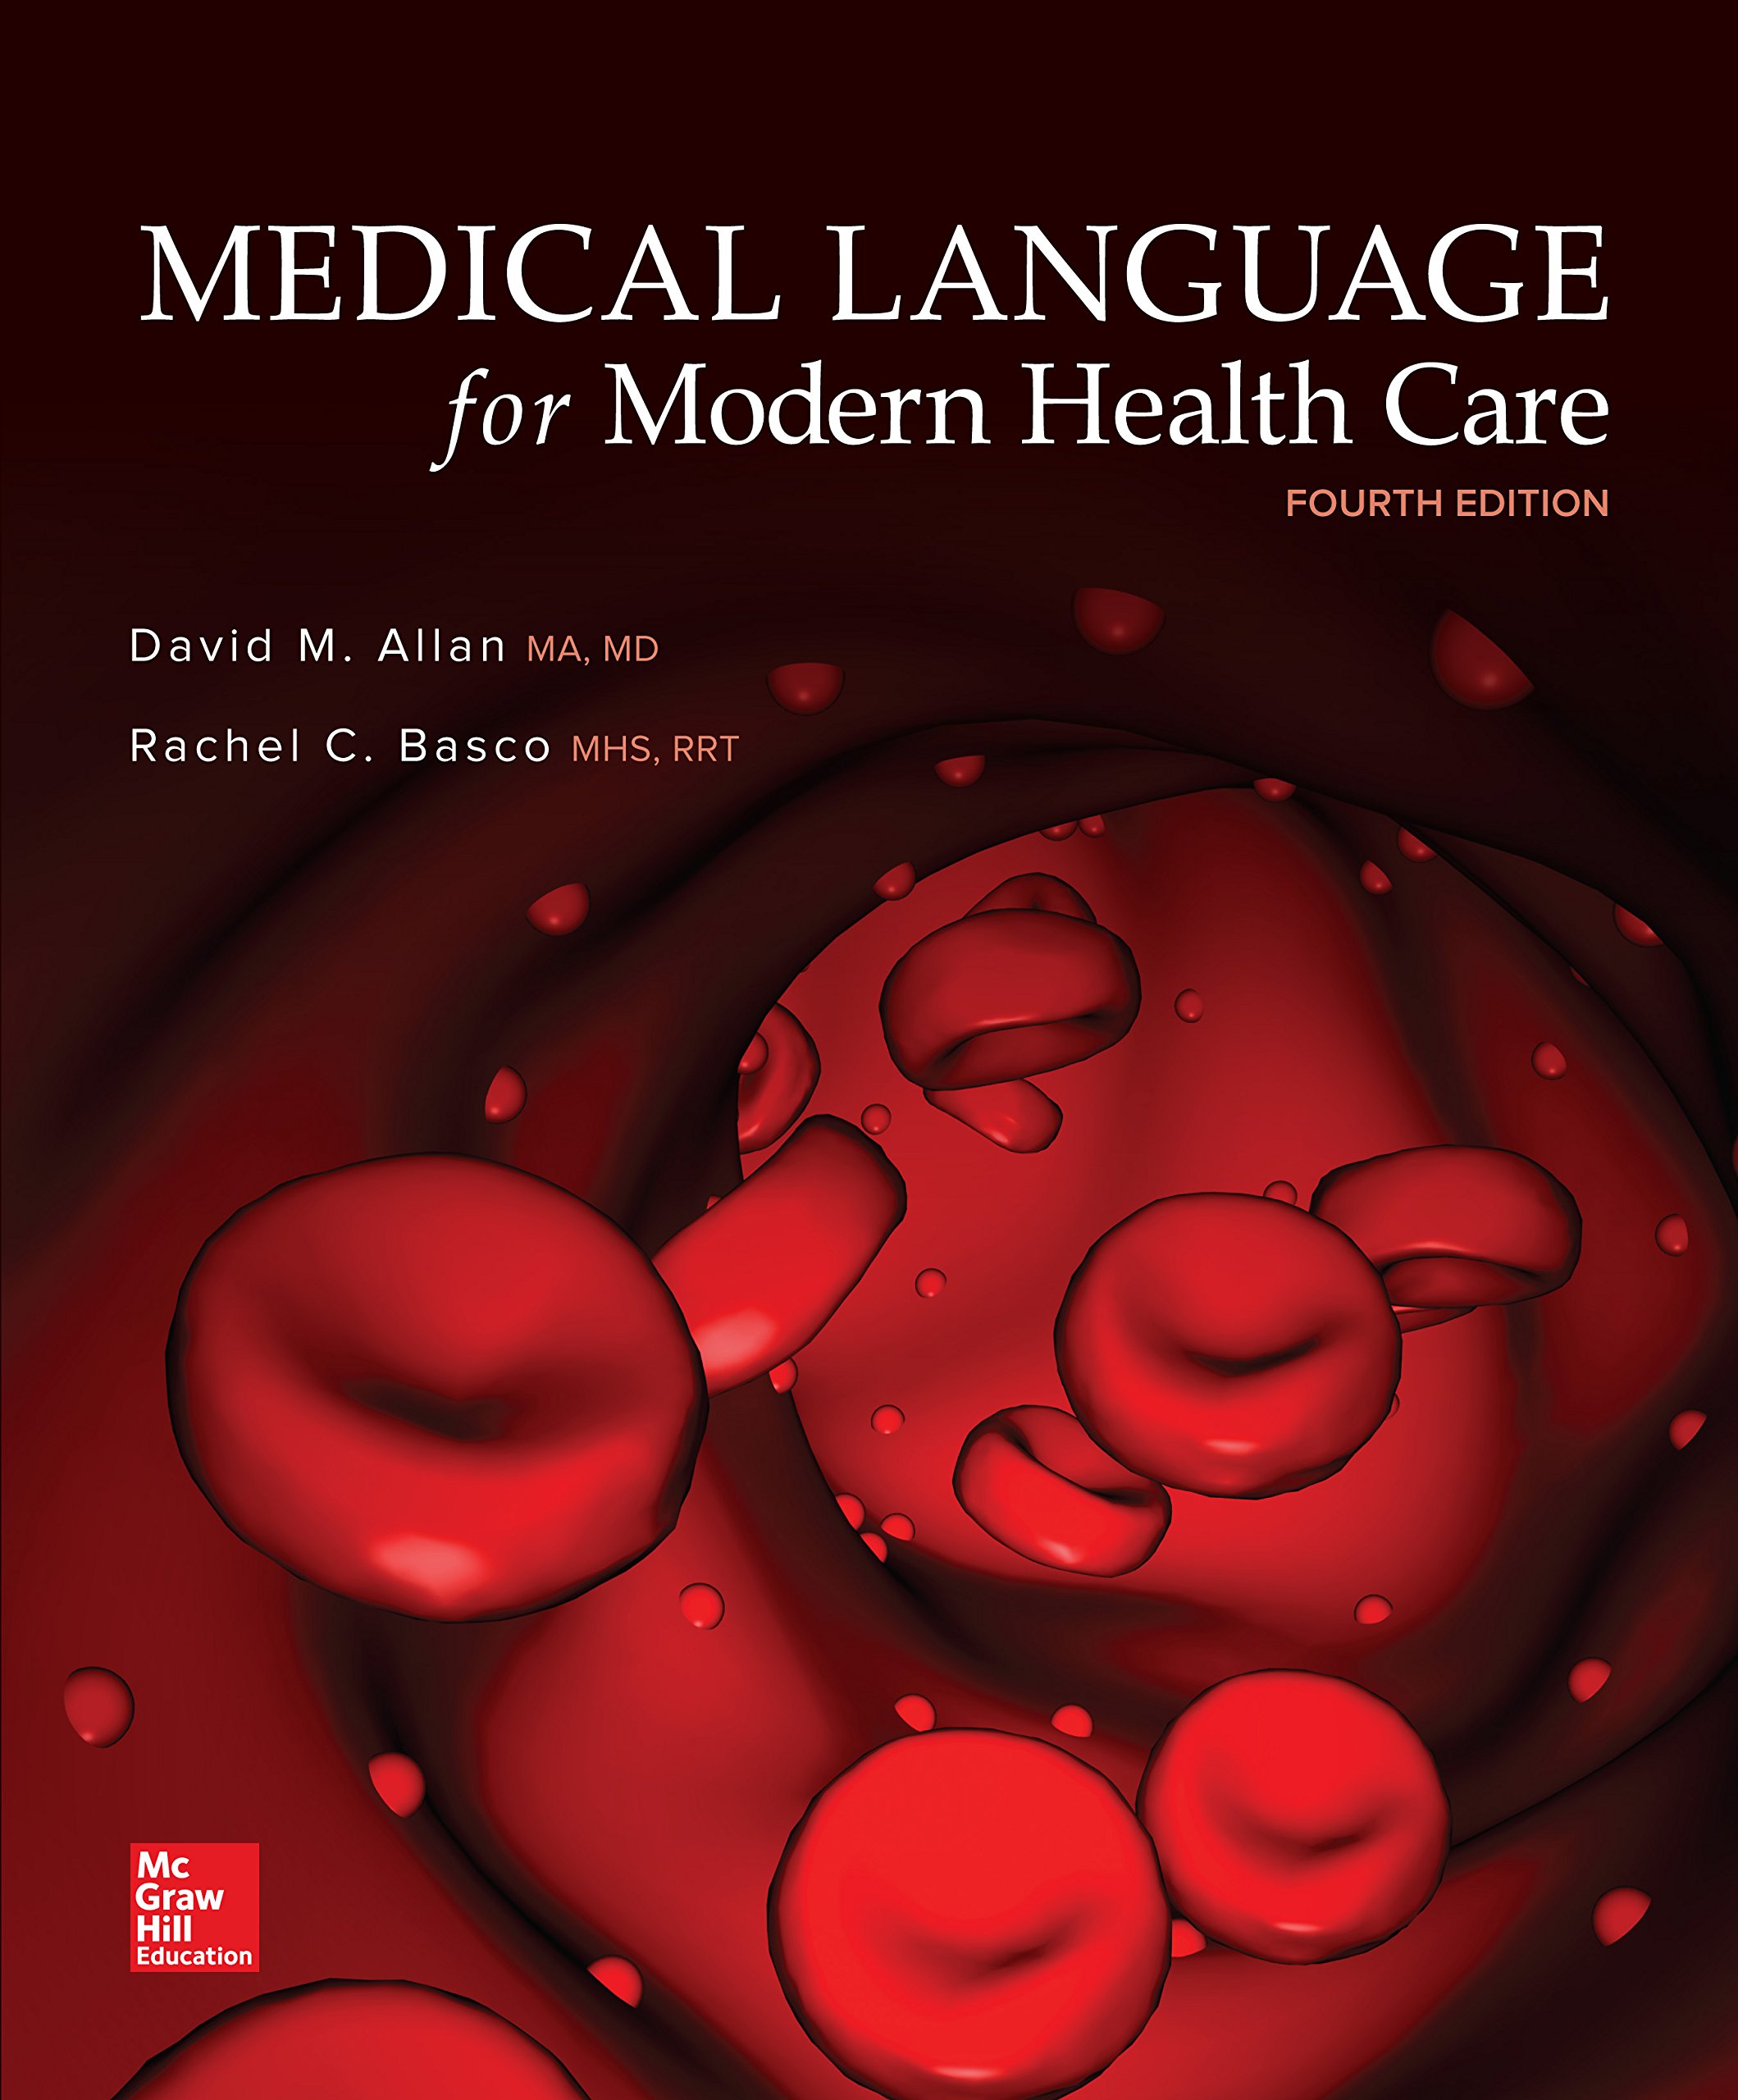 [PDF] Medical Language for Modern Health Care 4th Edition